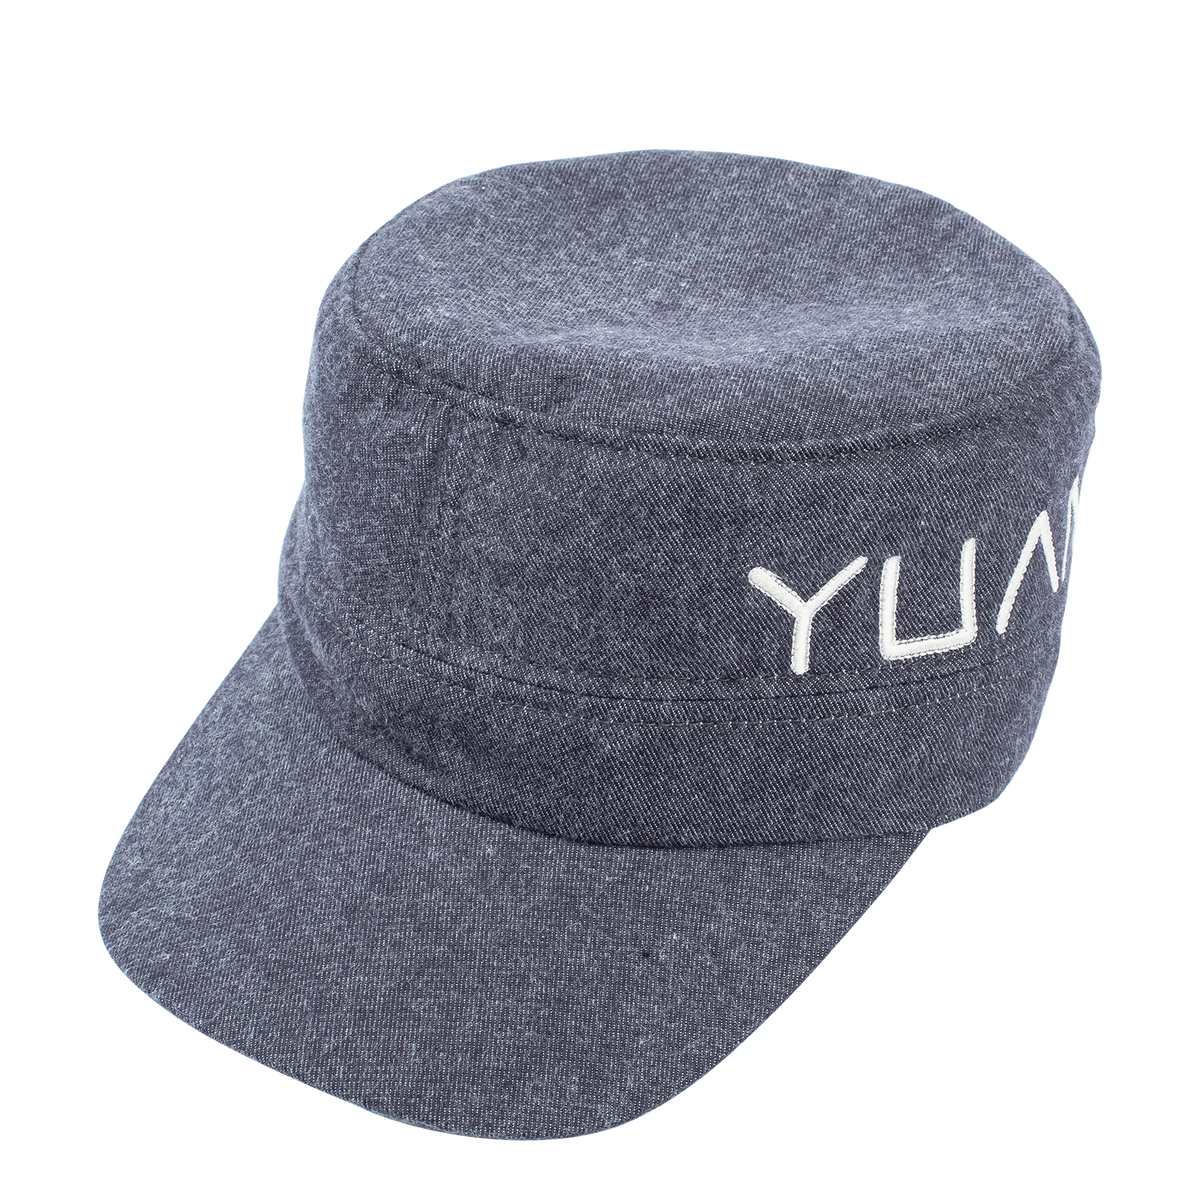 Dark blue kids cap with YUAN logo